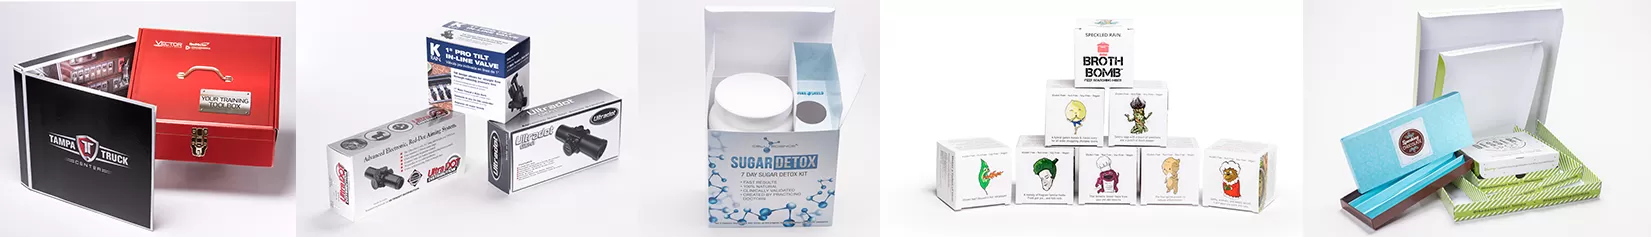 packaging-examples